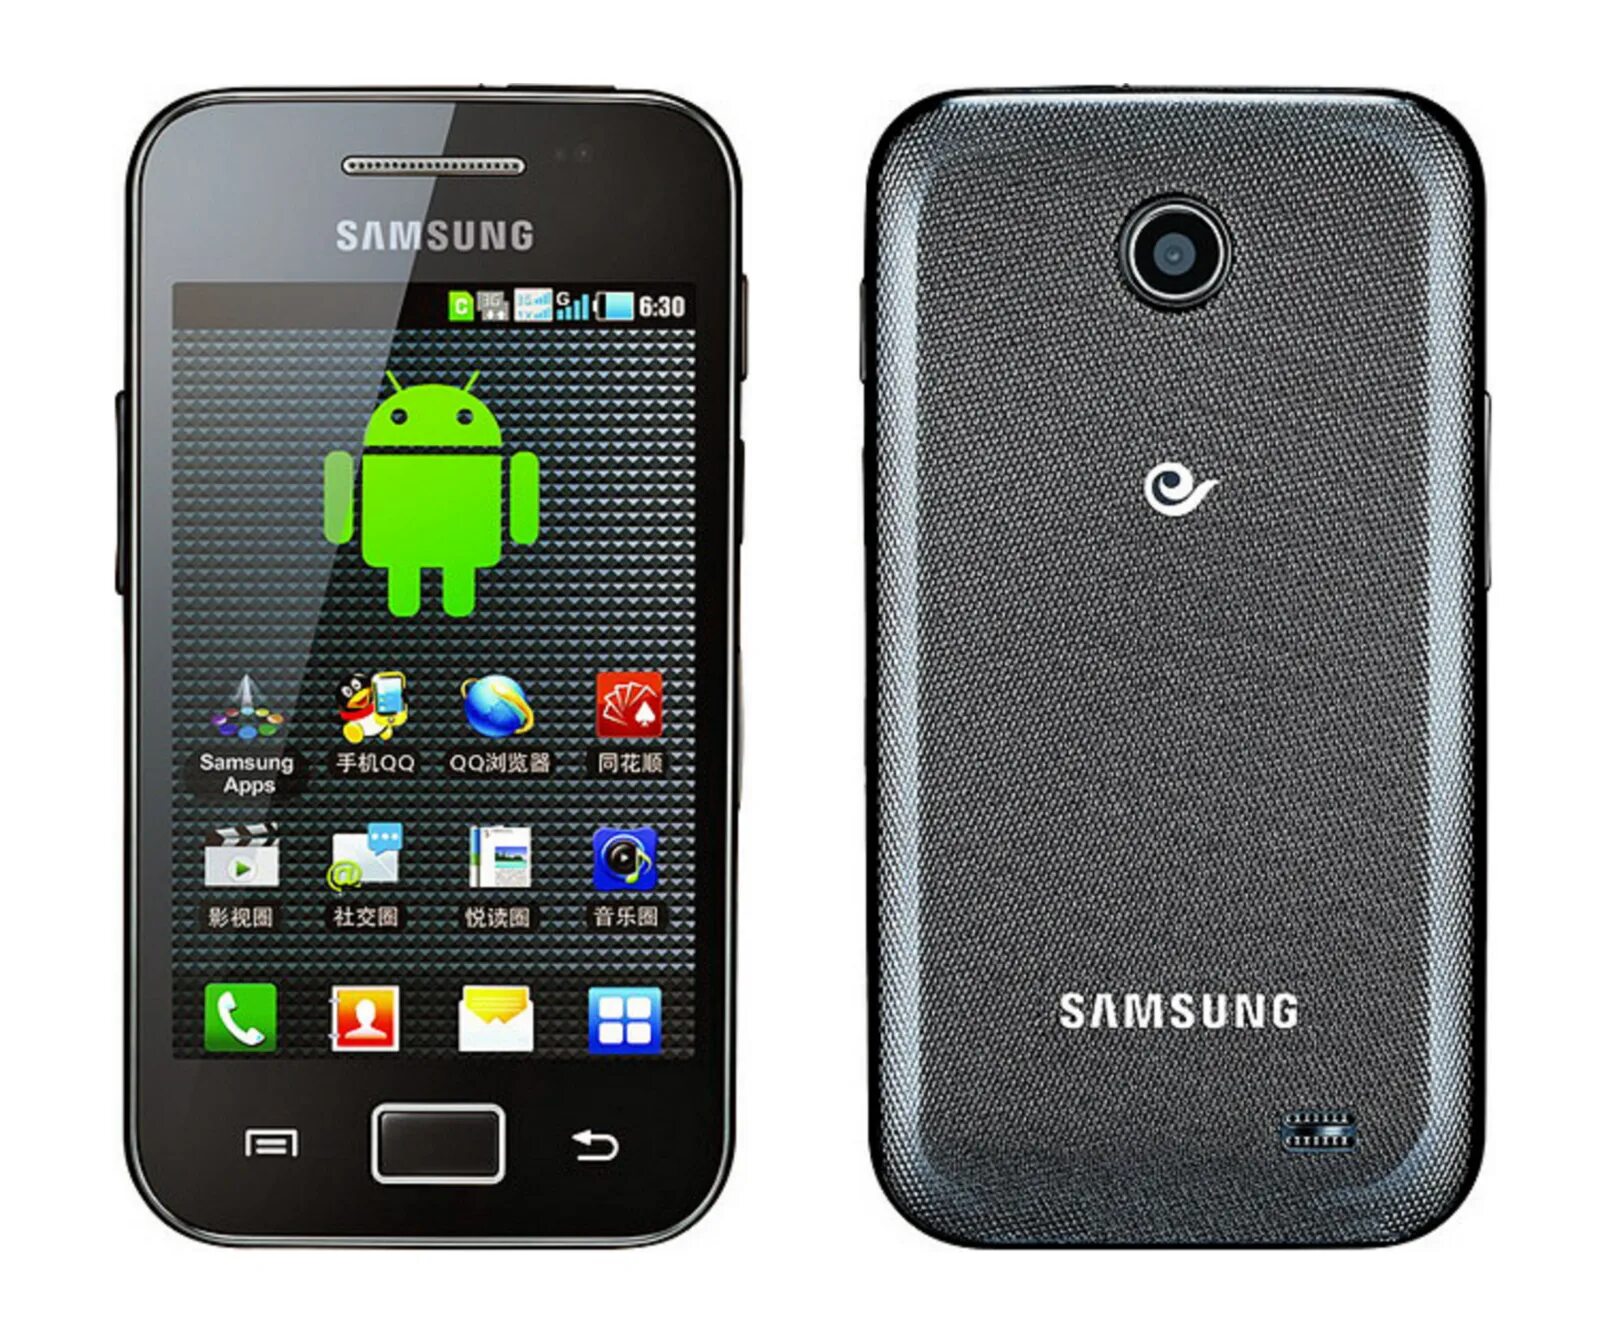 Телефон самсунг андроид 2. Самсунг галакси айс 1. Samsung Ace 1. Списунг гелакси Эйс 3. Самсунг Гэлакси Эйс 1.